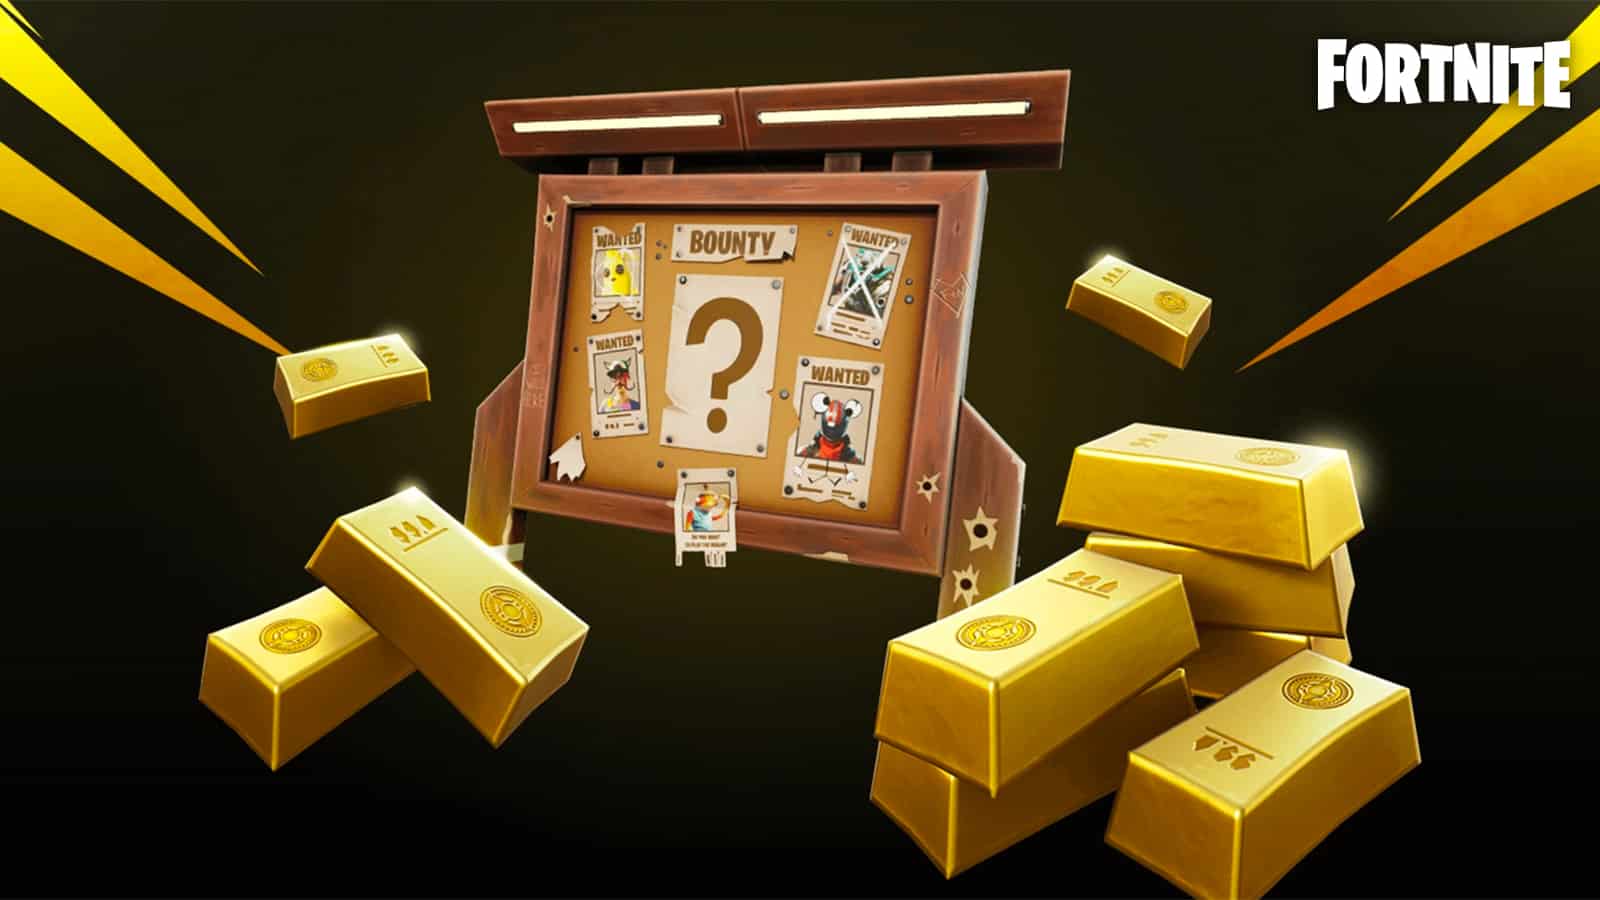 Fortnite Bounty Board and Gold Bars